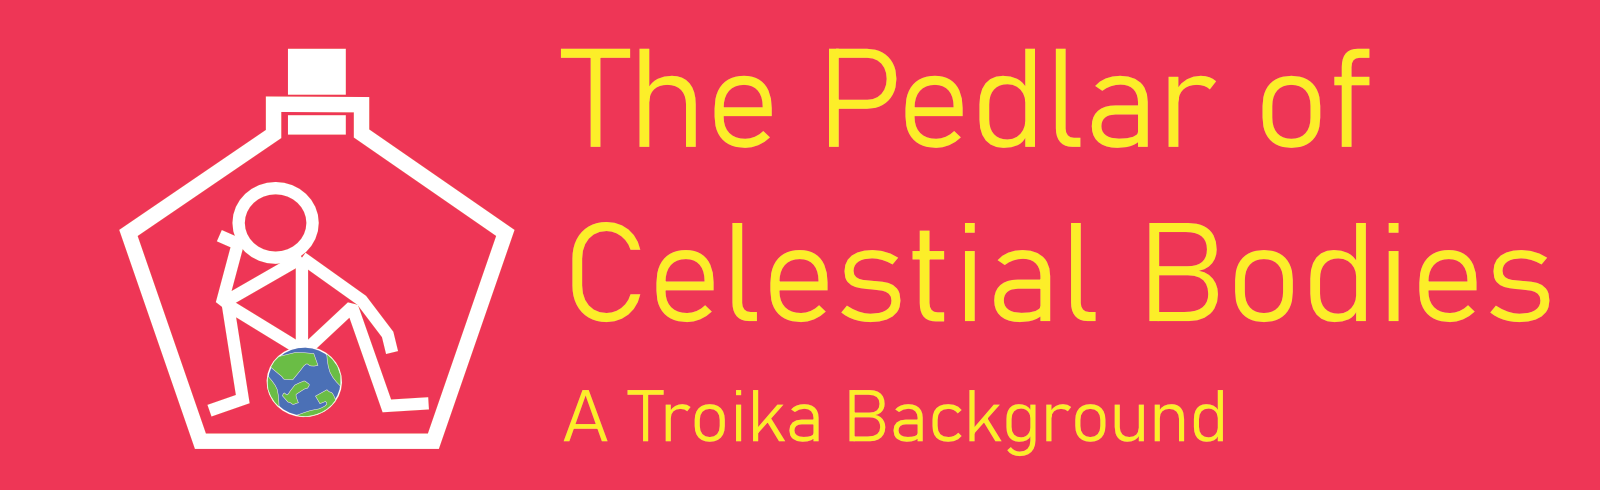 The Pedlar of Celestial Bodies